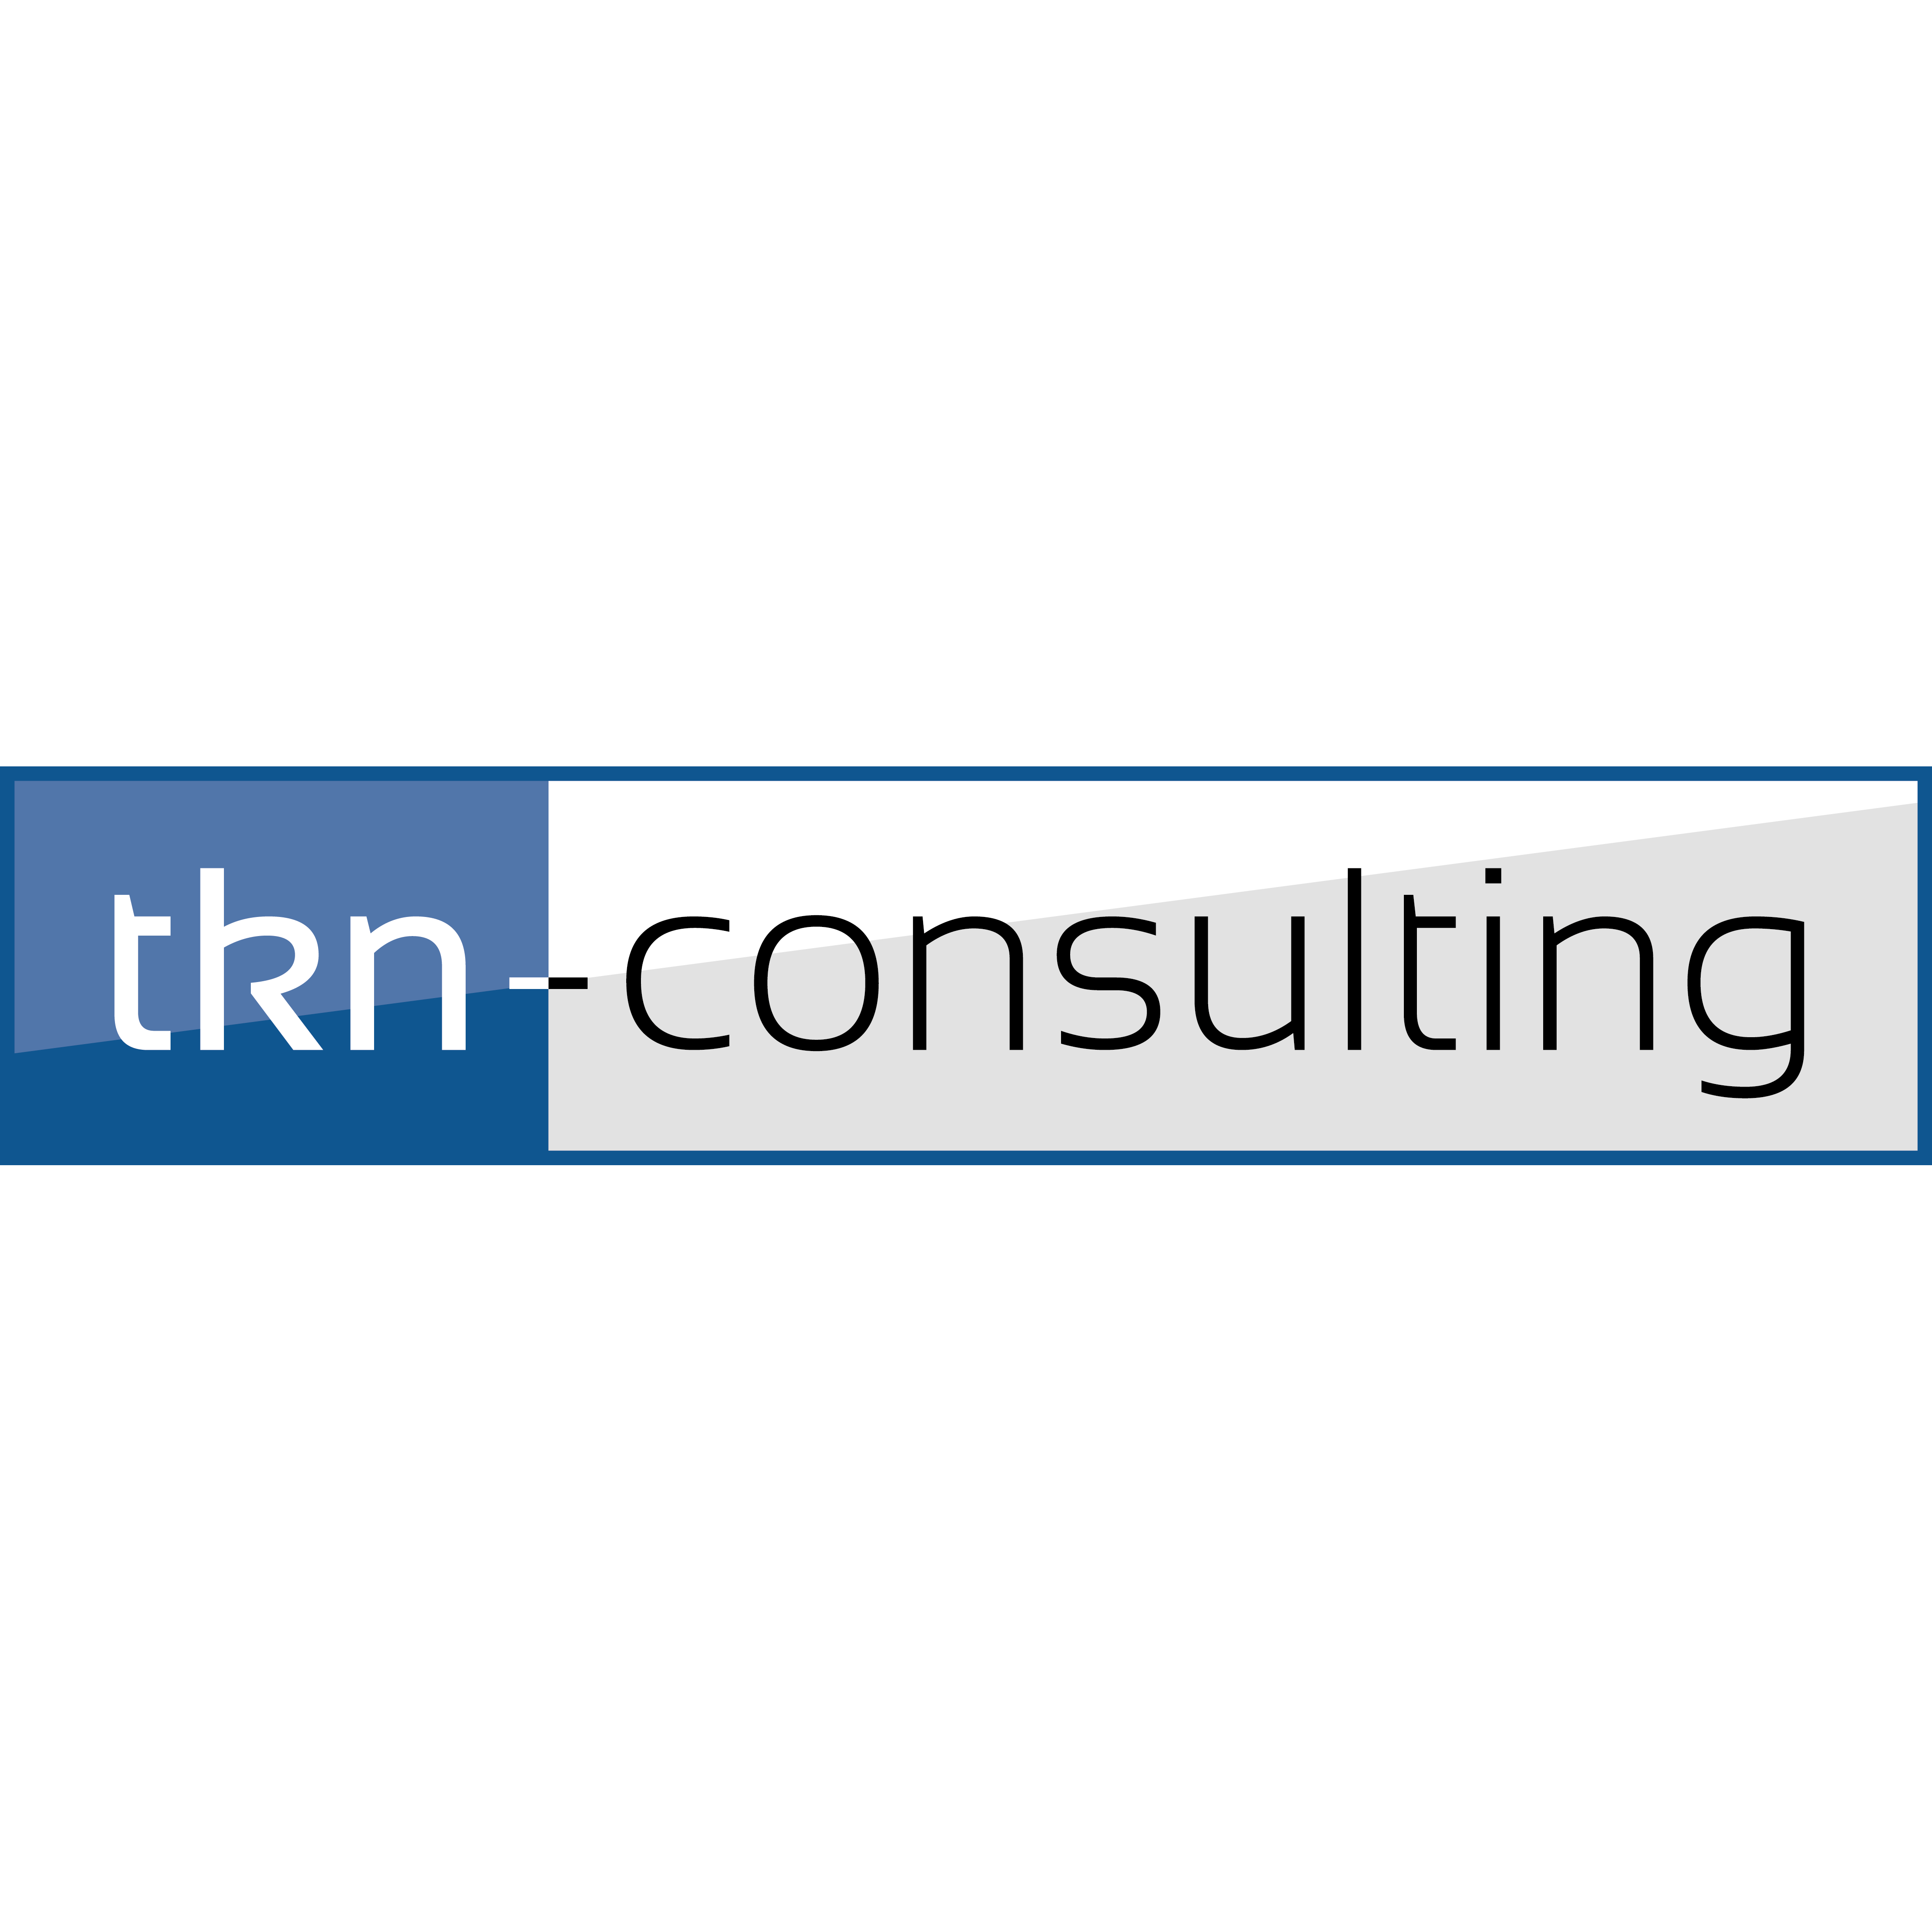 tkn - consulting Thorsten Kreutz Logo